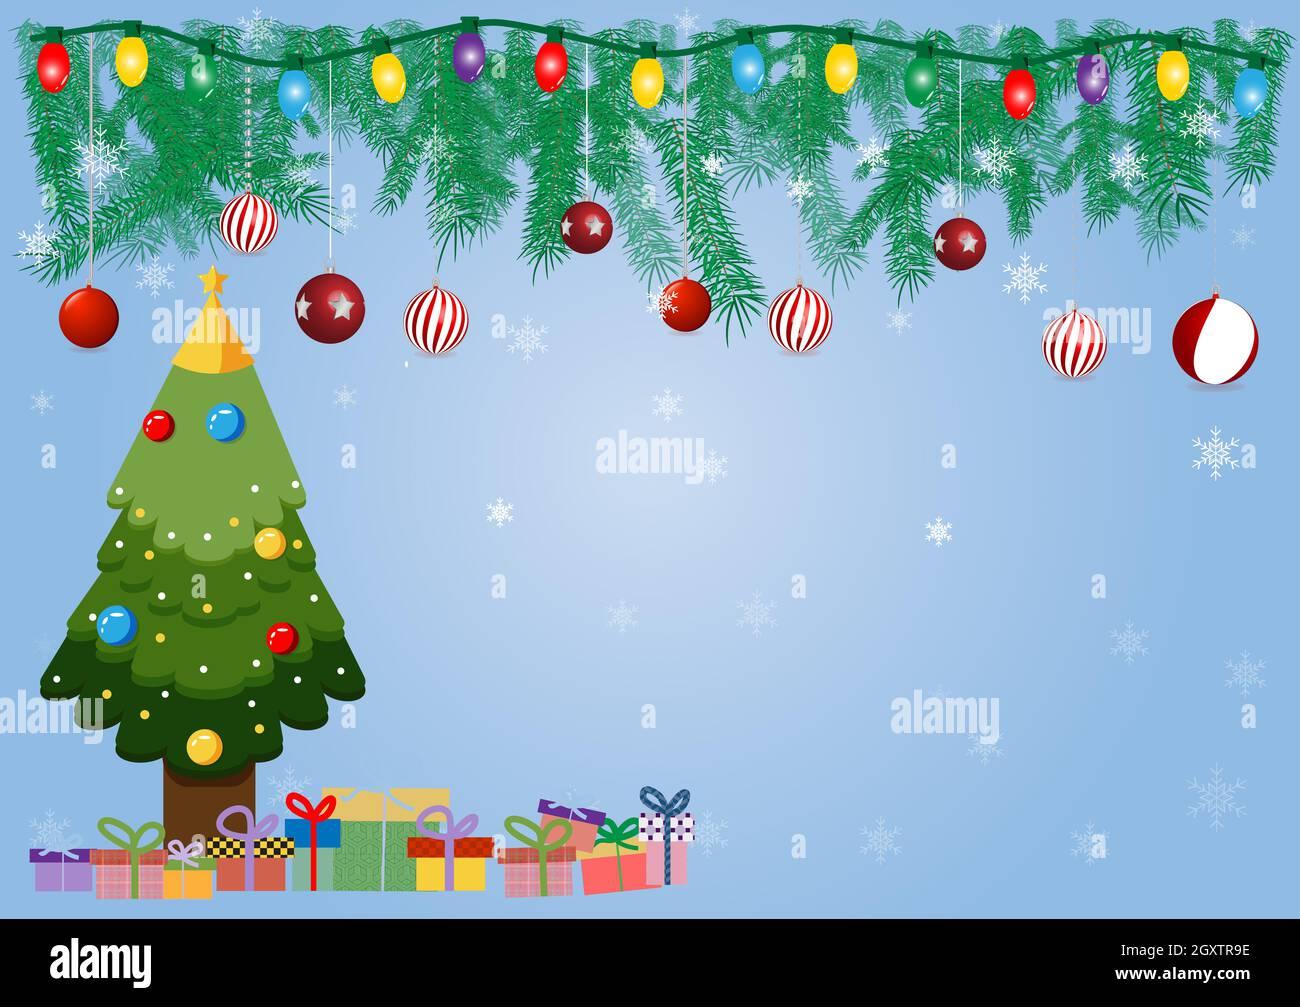 Merry Christmas Wallpaper Tree Gift Box Ball And